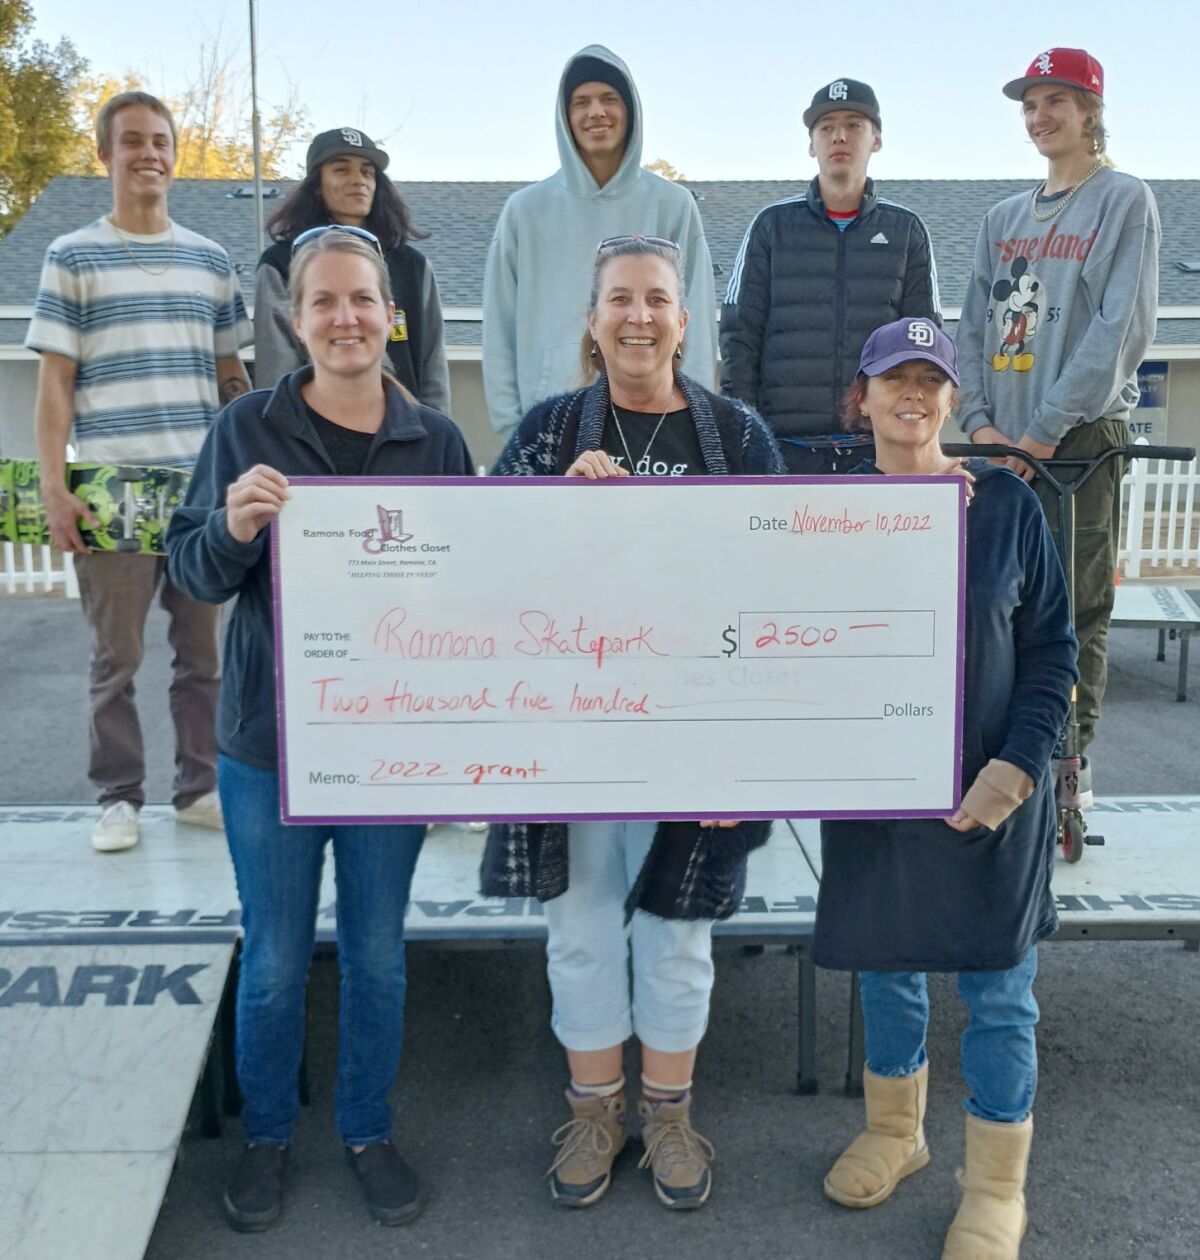 Ramona Skatepark Champions representatives accept a $2,500 grant from Ramona Food & Clothes Closet.